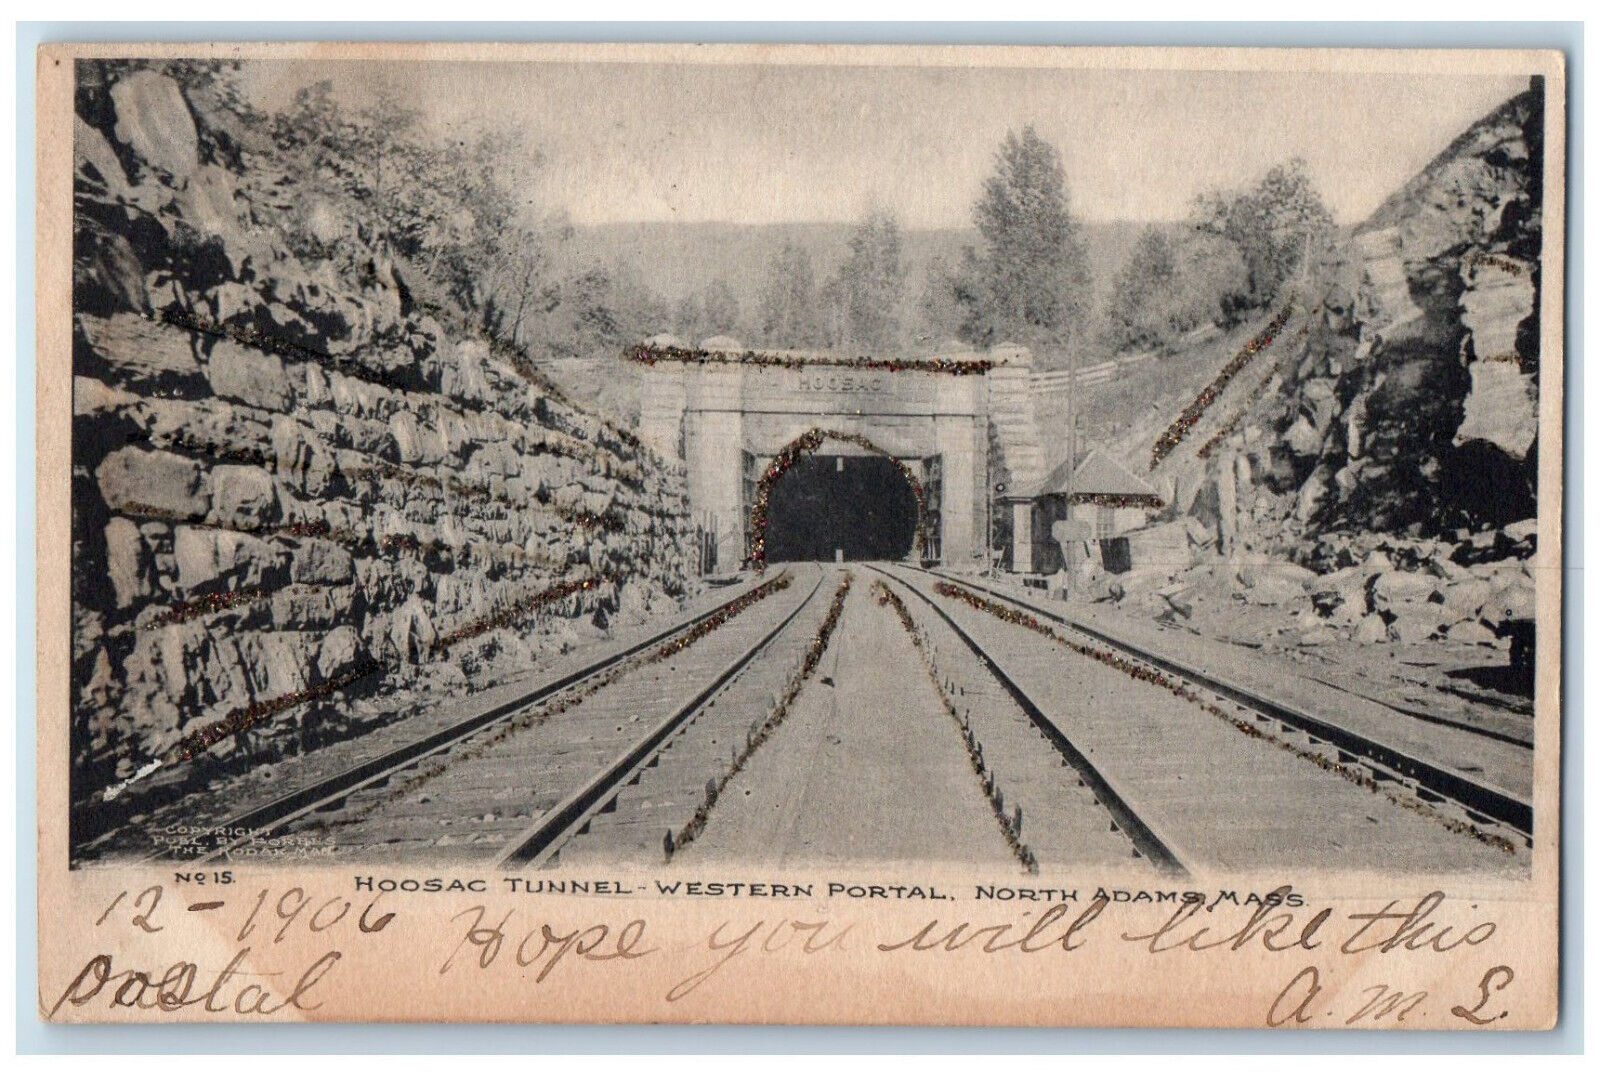 1906 West Portal Hoosac Tunnel North Adams Massachusetts MA Conway MA Postcard